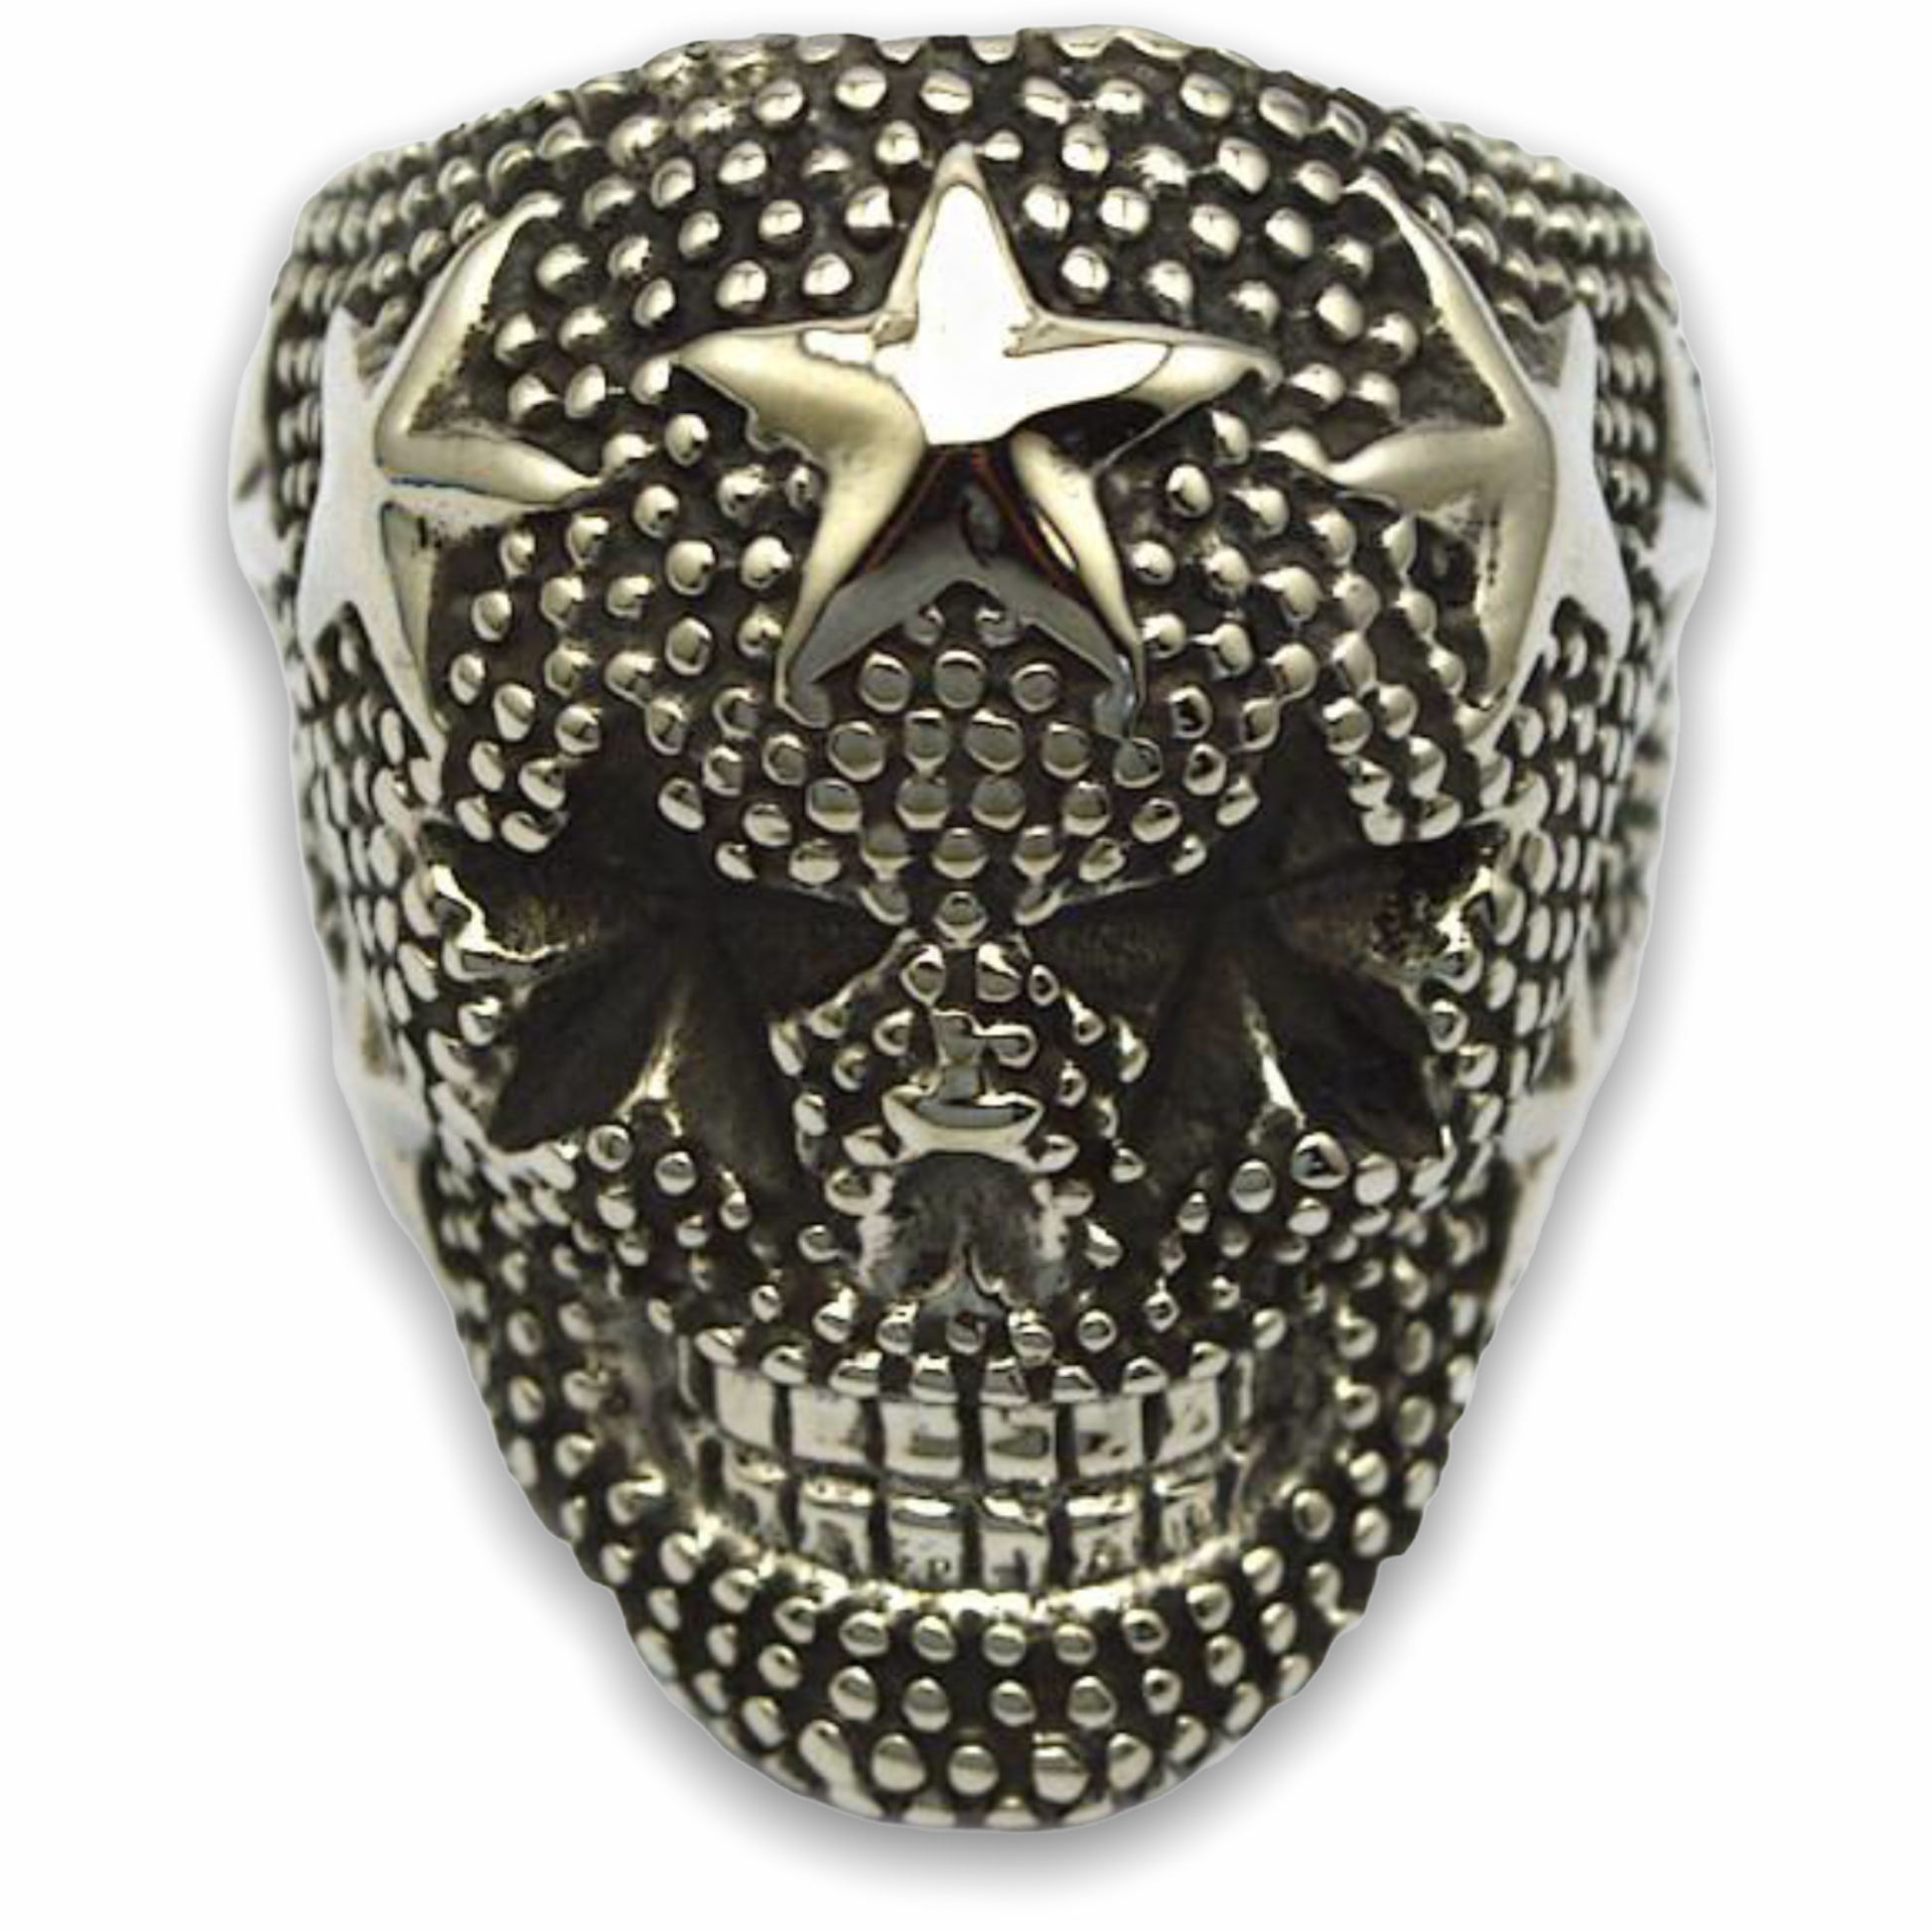 Solid Stainless Steel Skull Ring